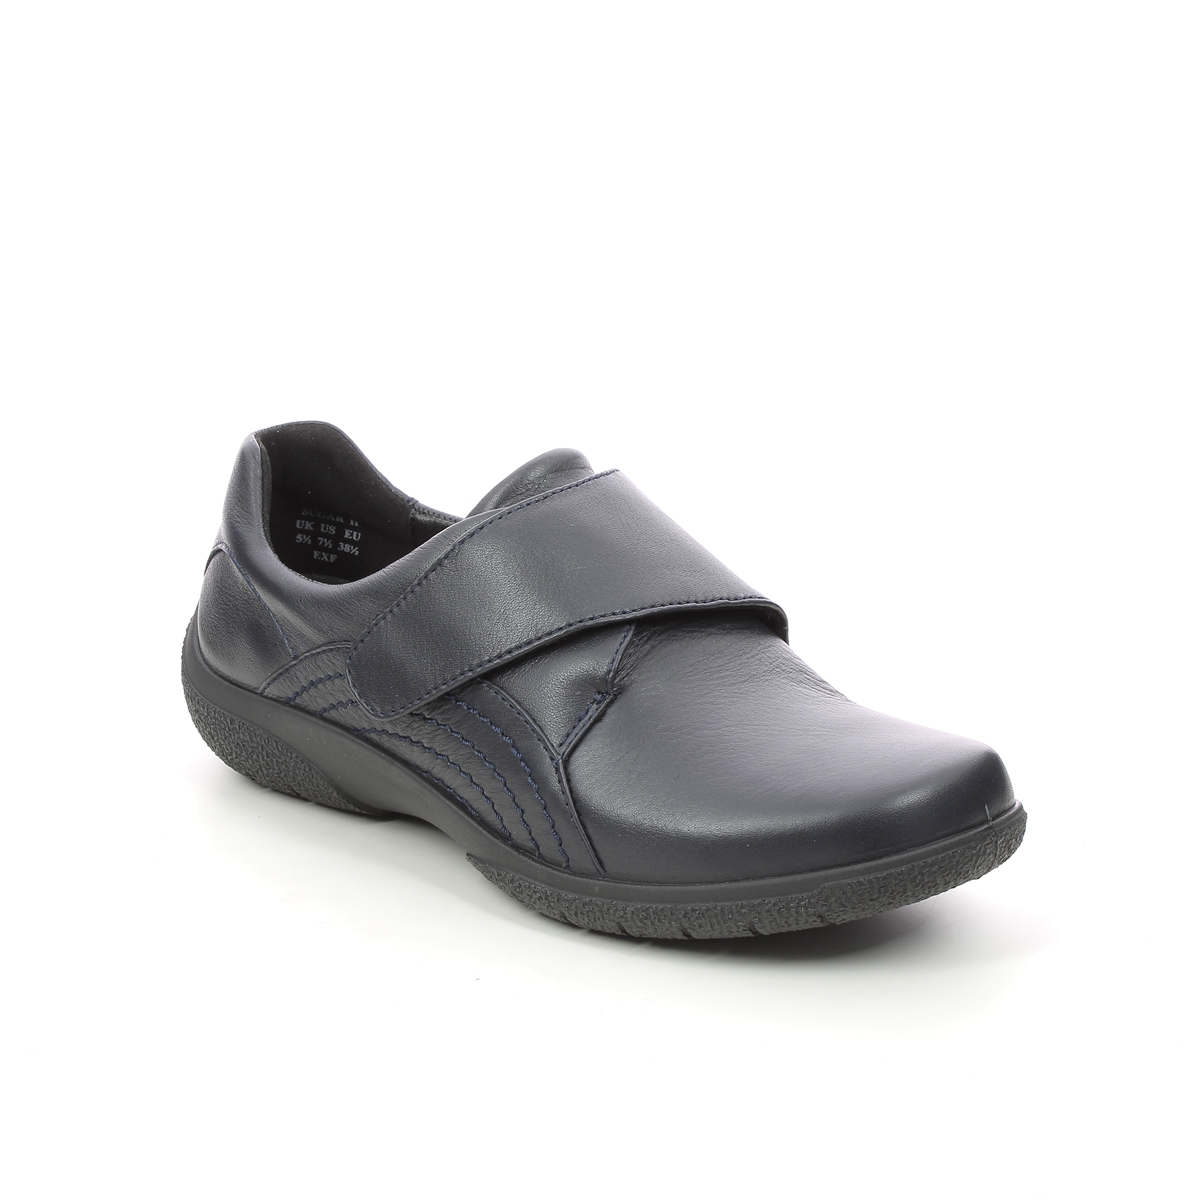 Hotter Sugar 2 Wide 9511-71 Navy Leather Comfort Slip On Shoes